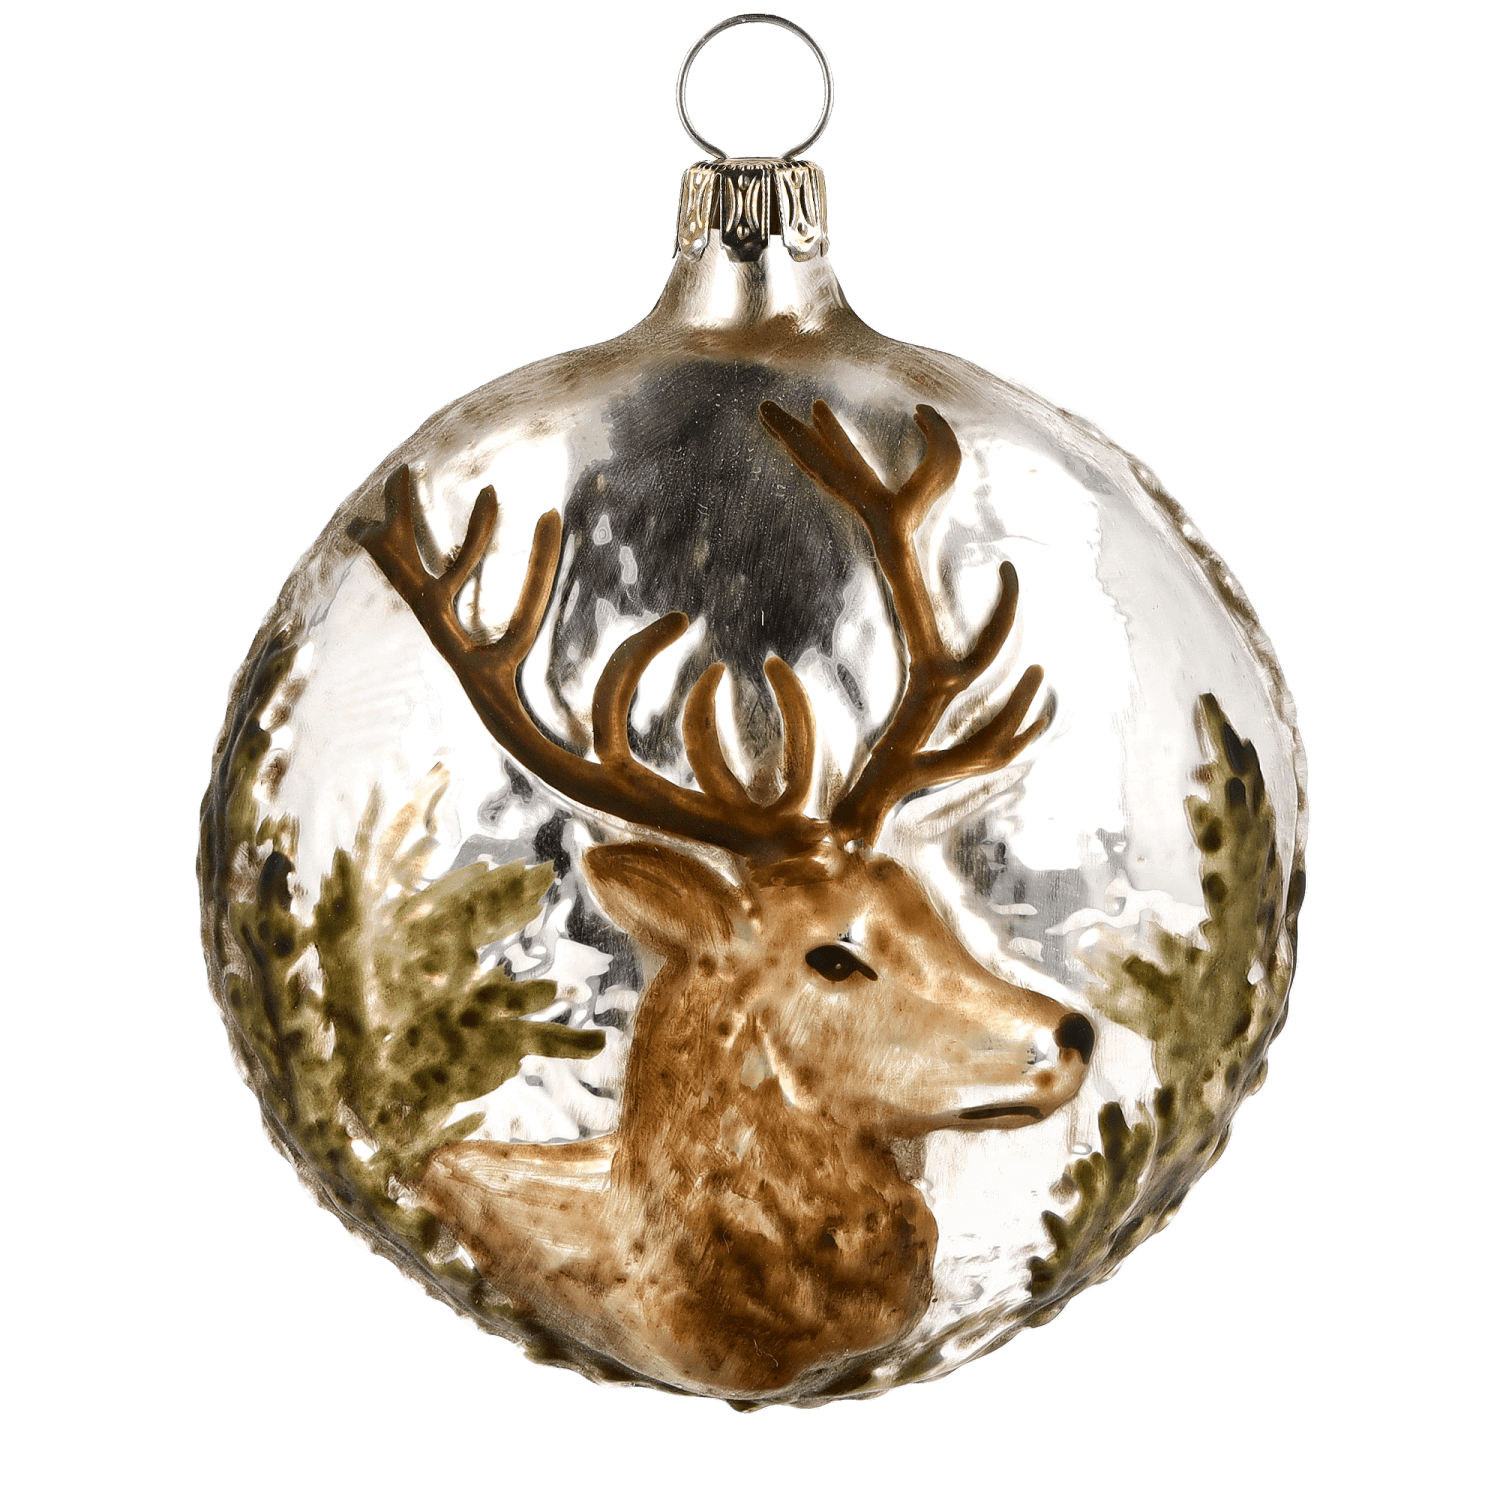 MAROLIN® - Glass ornament "Stag"